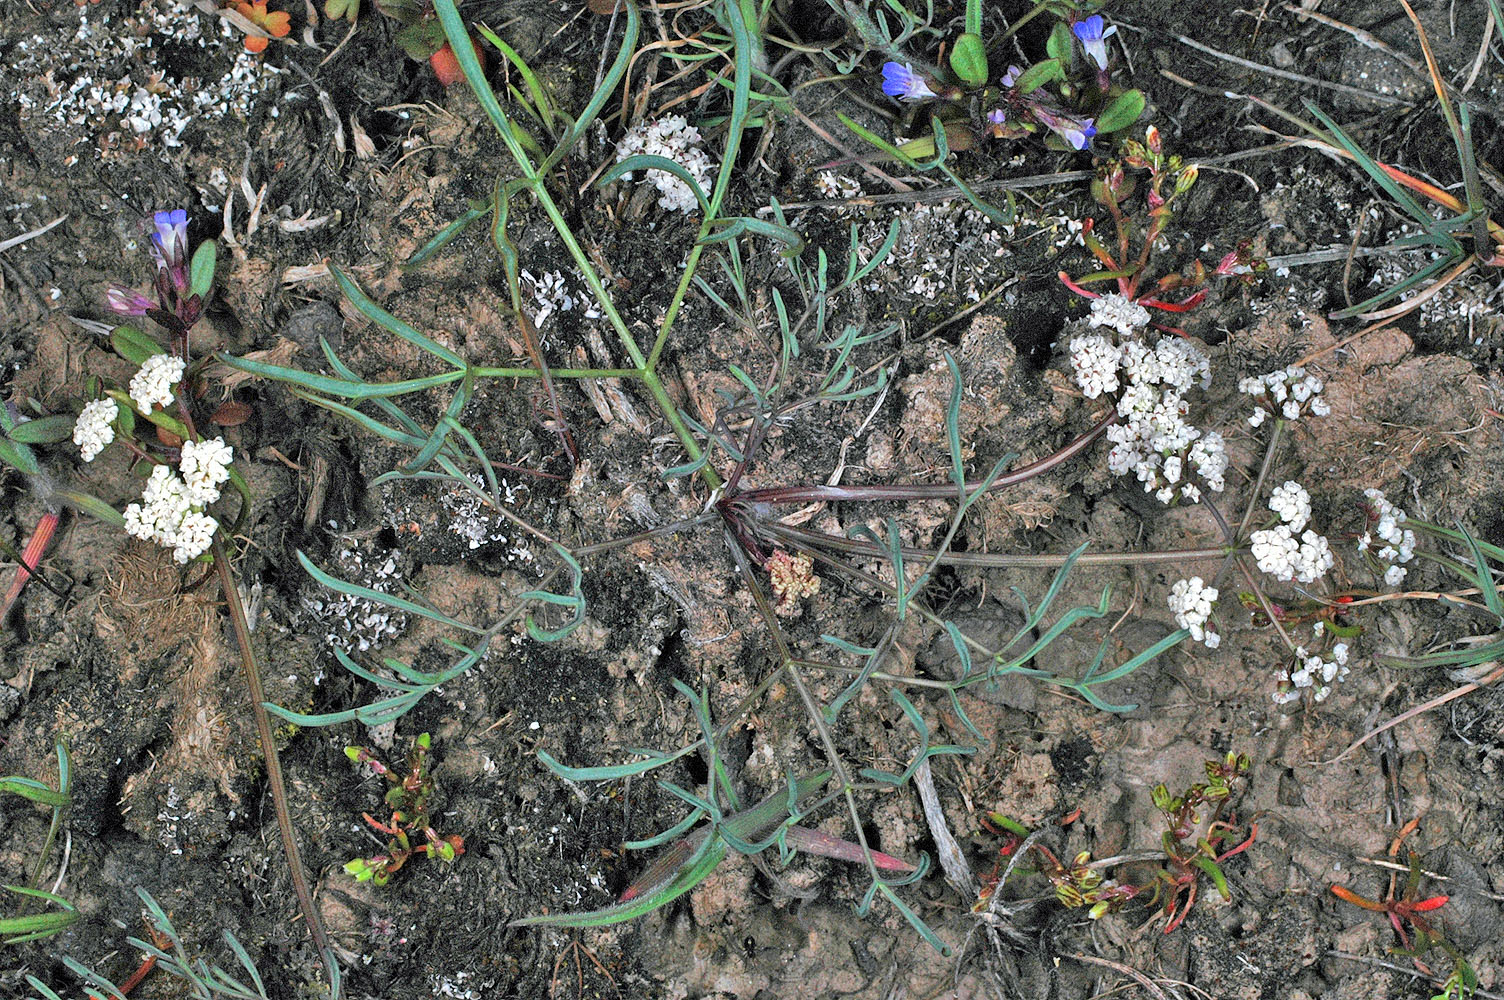 Flora of Eastern Washington Image: Lomatium farinosum